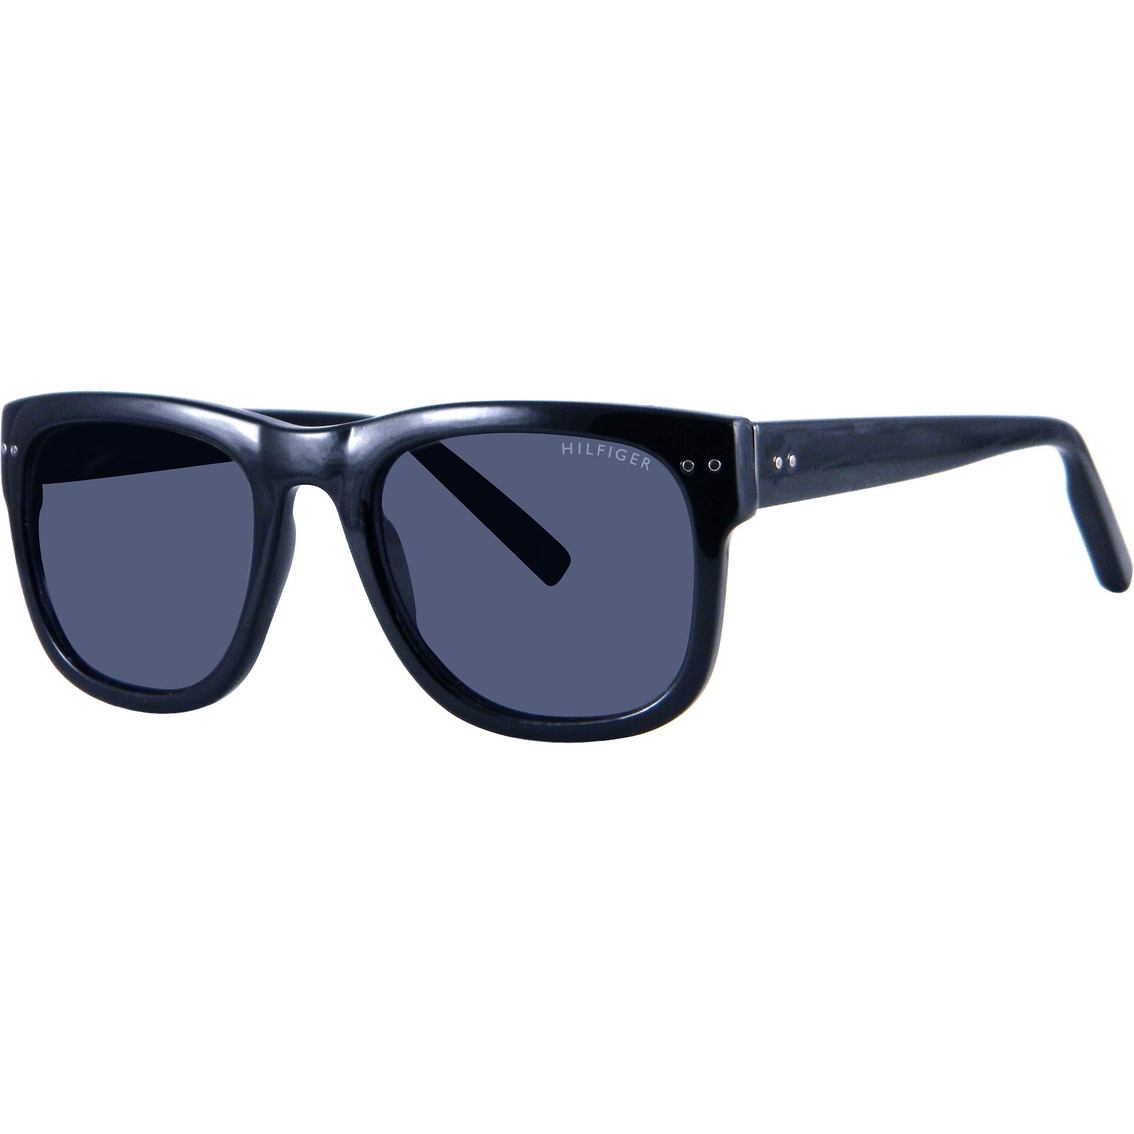 Tommy Hilfiger Sunglasses Men153 | Men's Sunglasses | Clothing ...